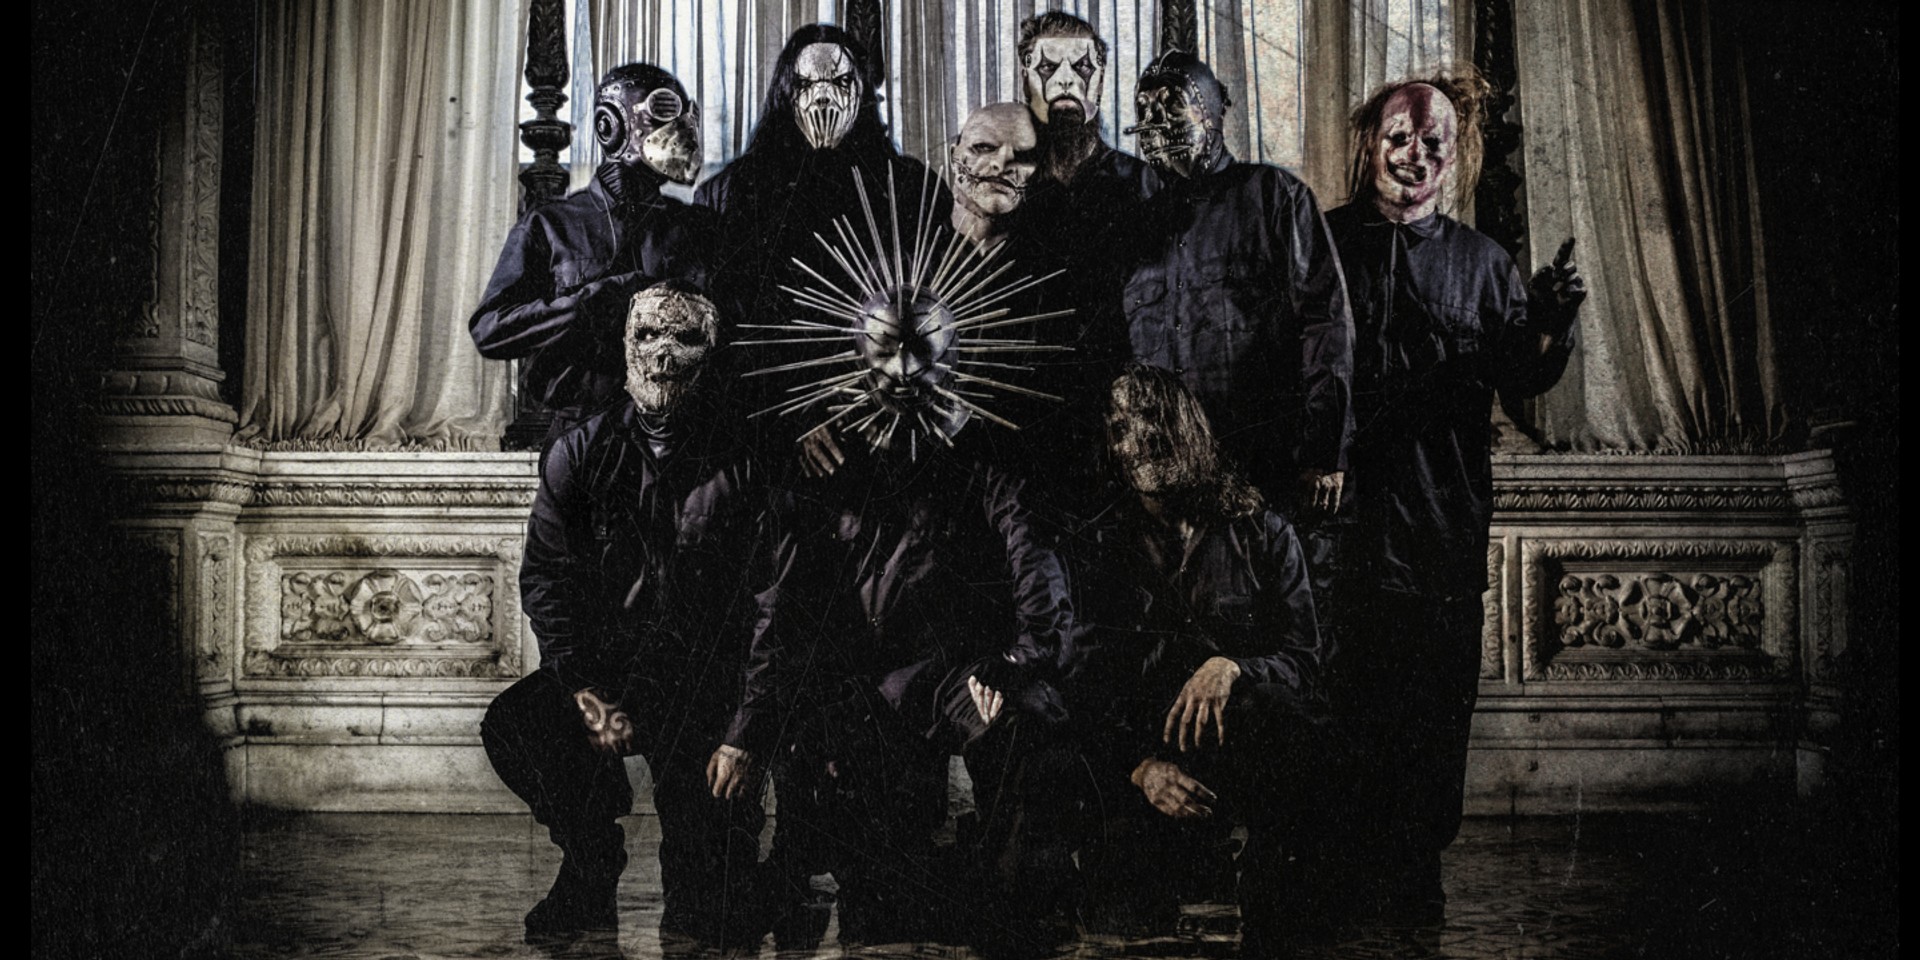 Slipknot releases brutal surprise track 'All Out Life' for Halloween - listen